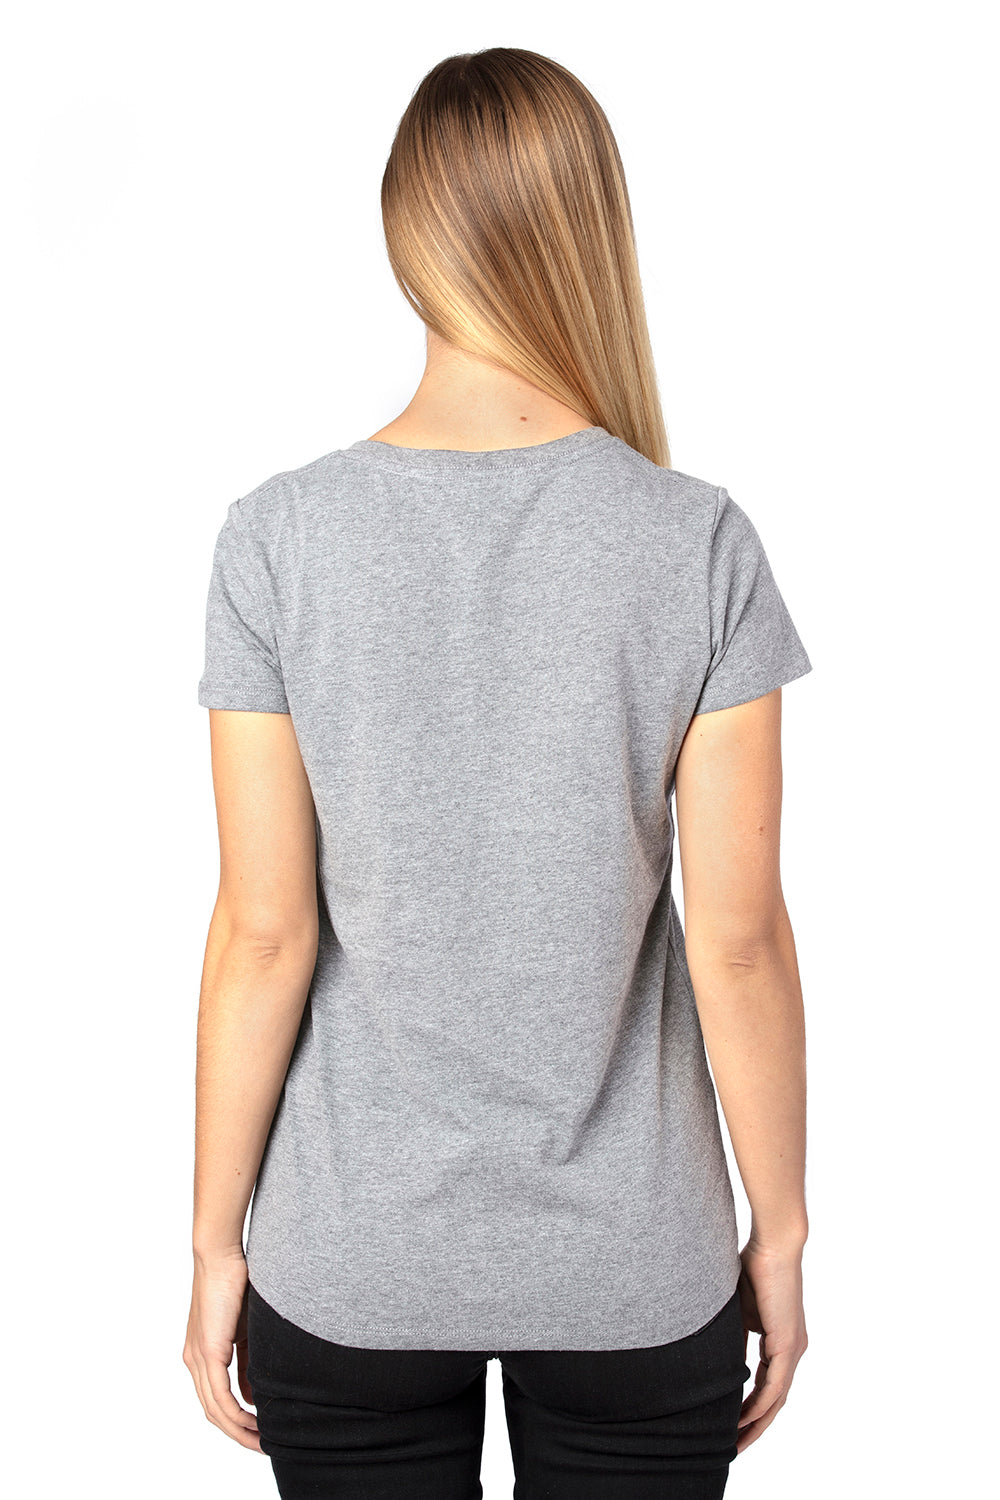 Threadfast Apparel 200RV Womens Ultimate Short Sleeve V-Neck T-Shirt Heather Grey Back